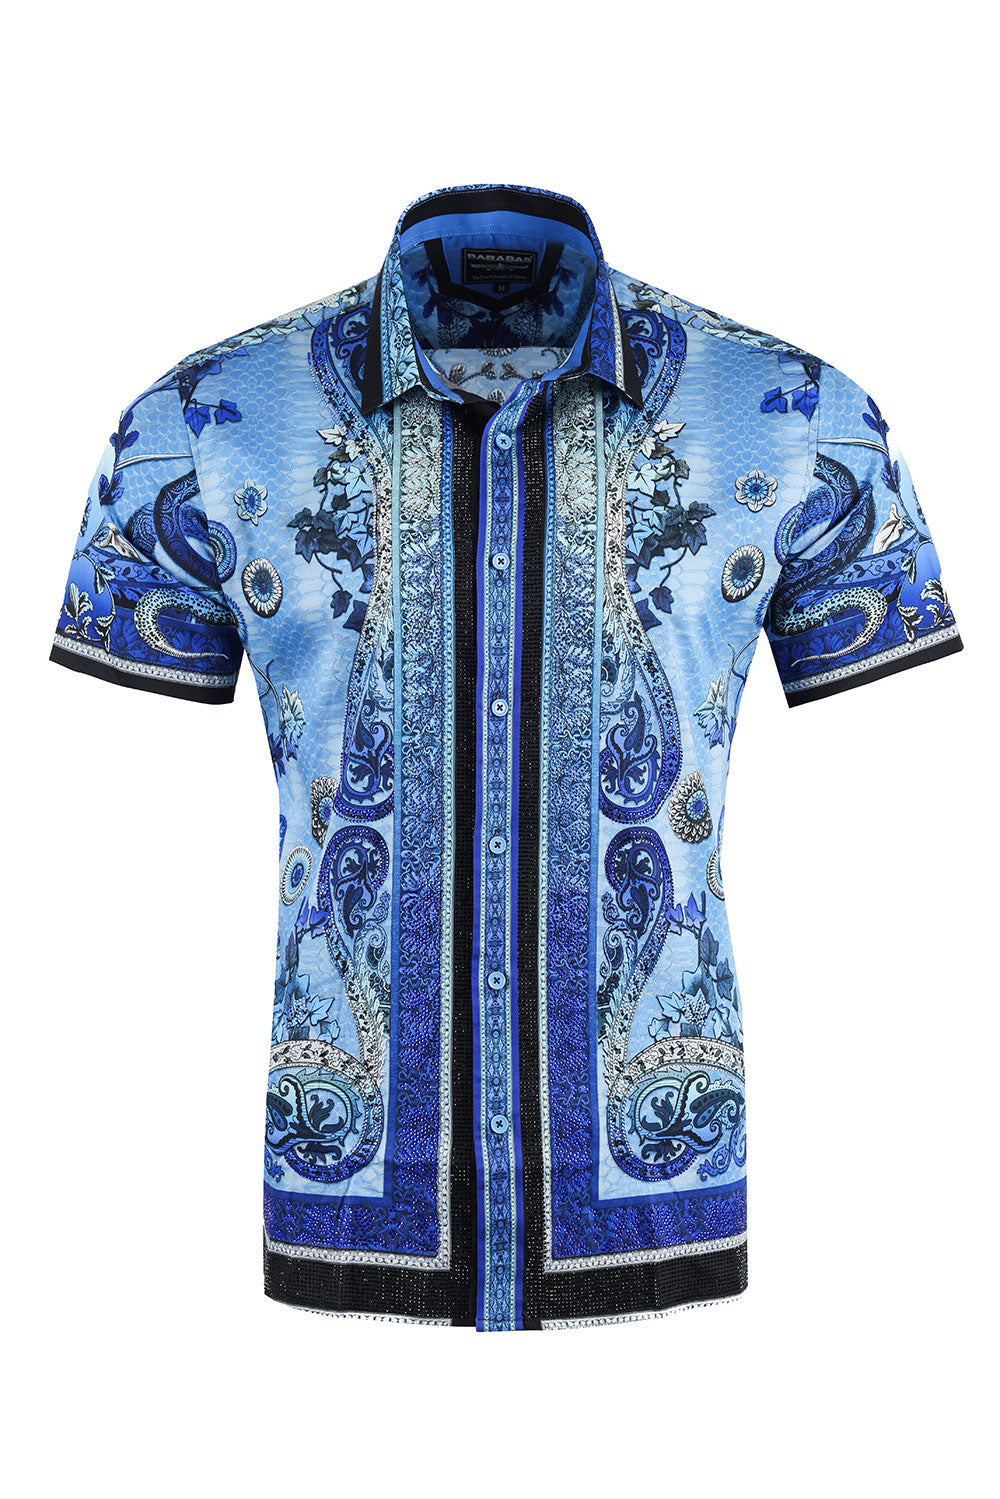 TALISHKO - Flame Print Short Sleeve Shirt Blue Black / L